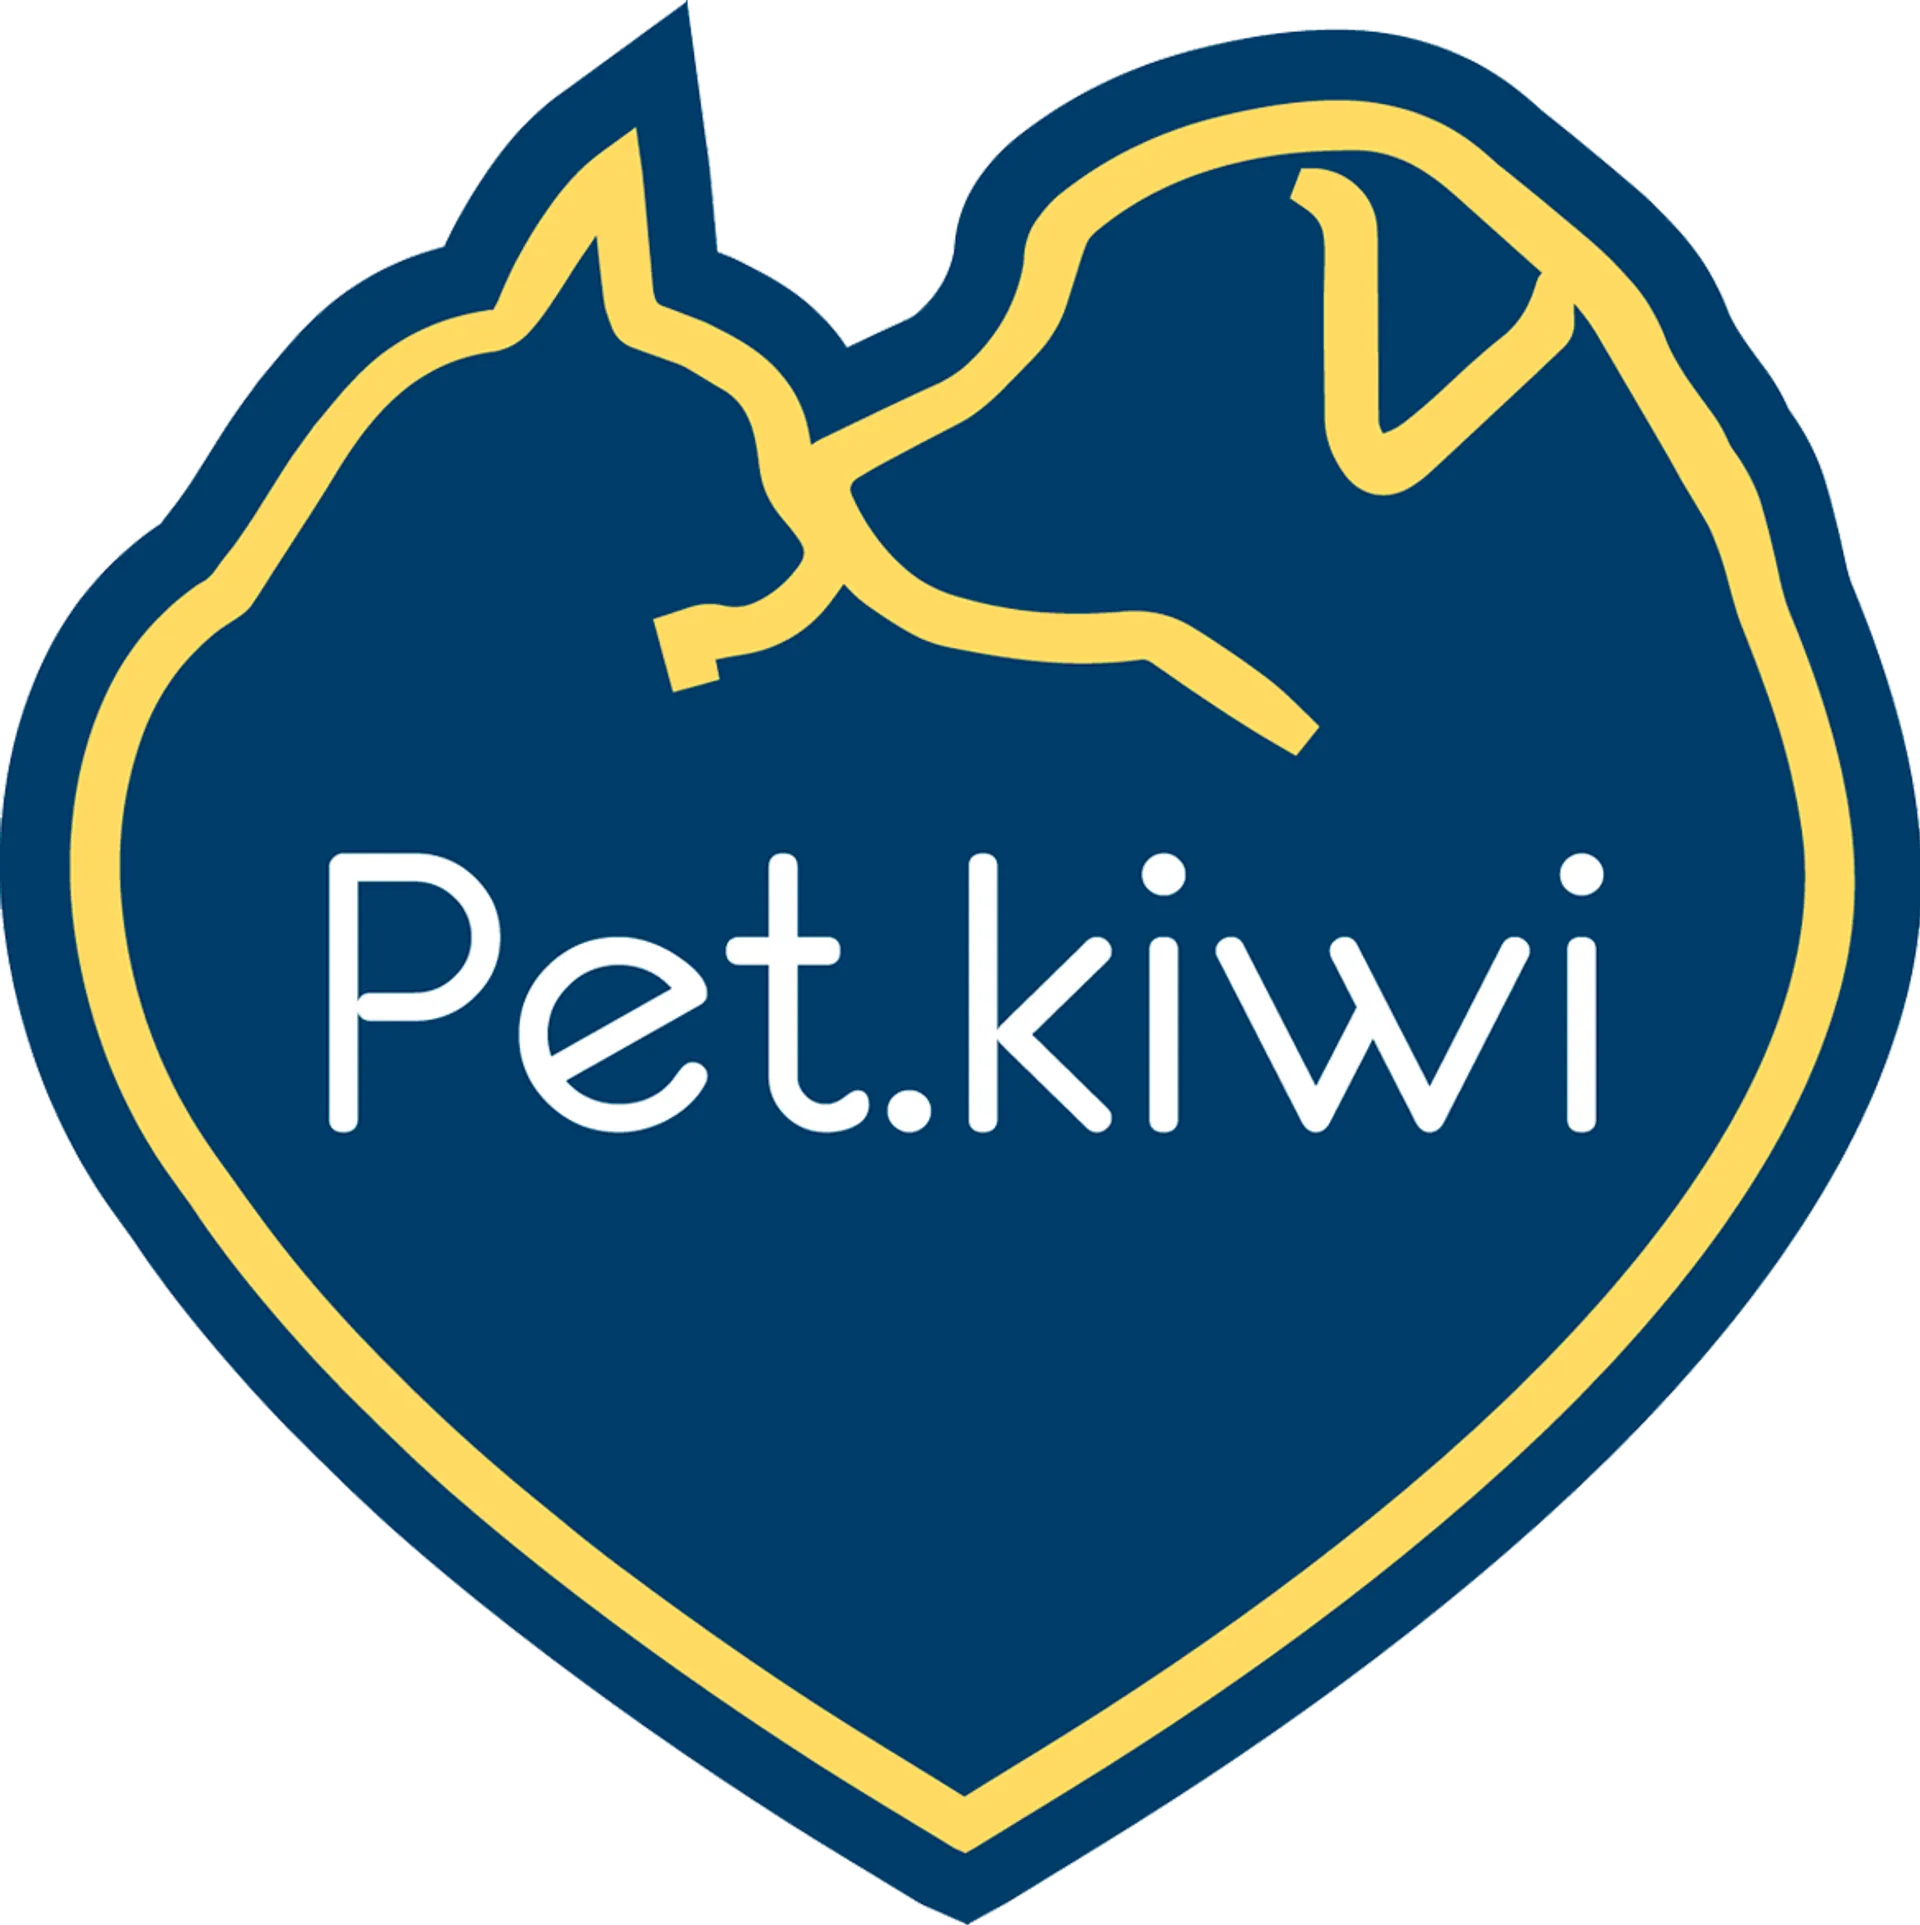 PET KIWI logo. Current weekly ad